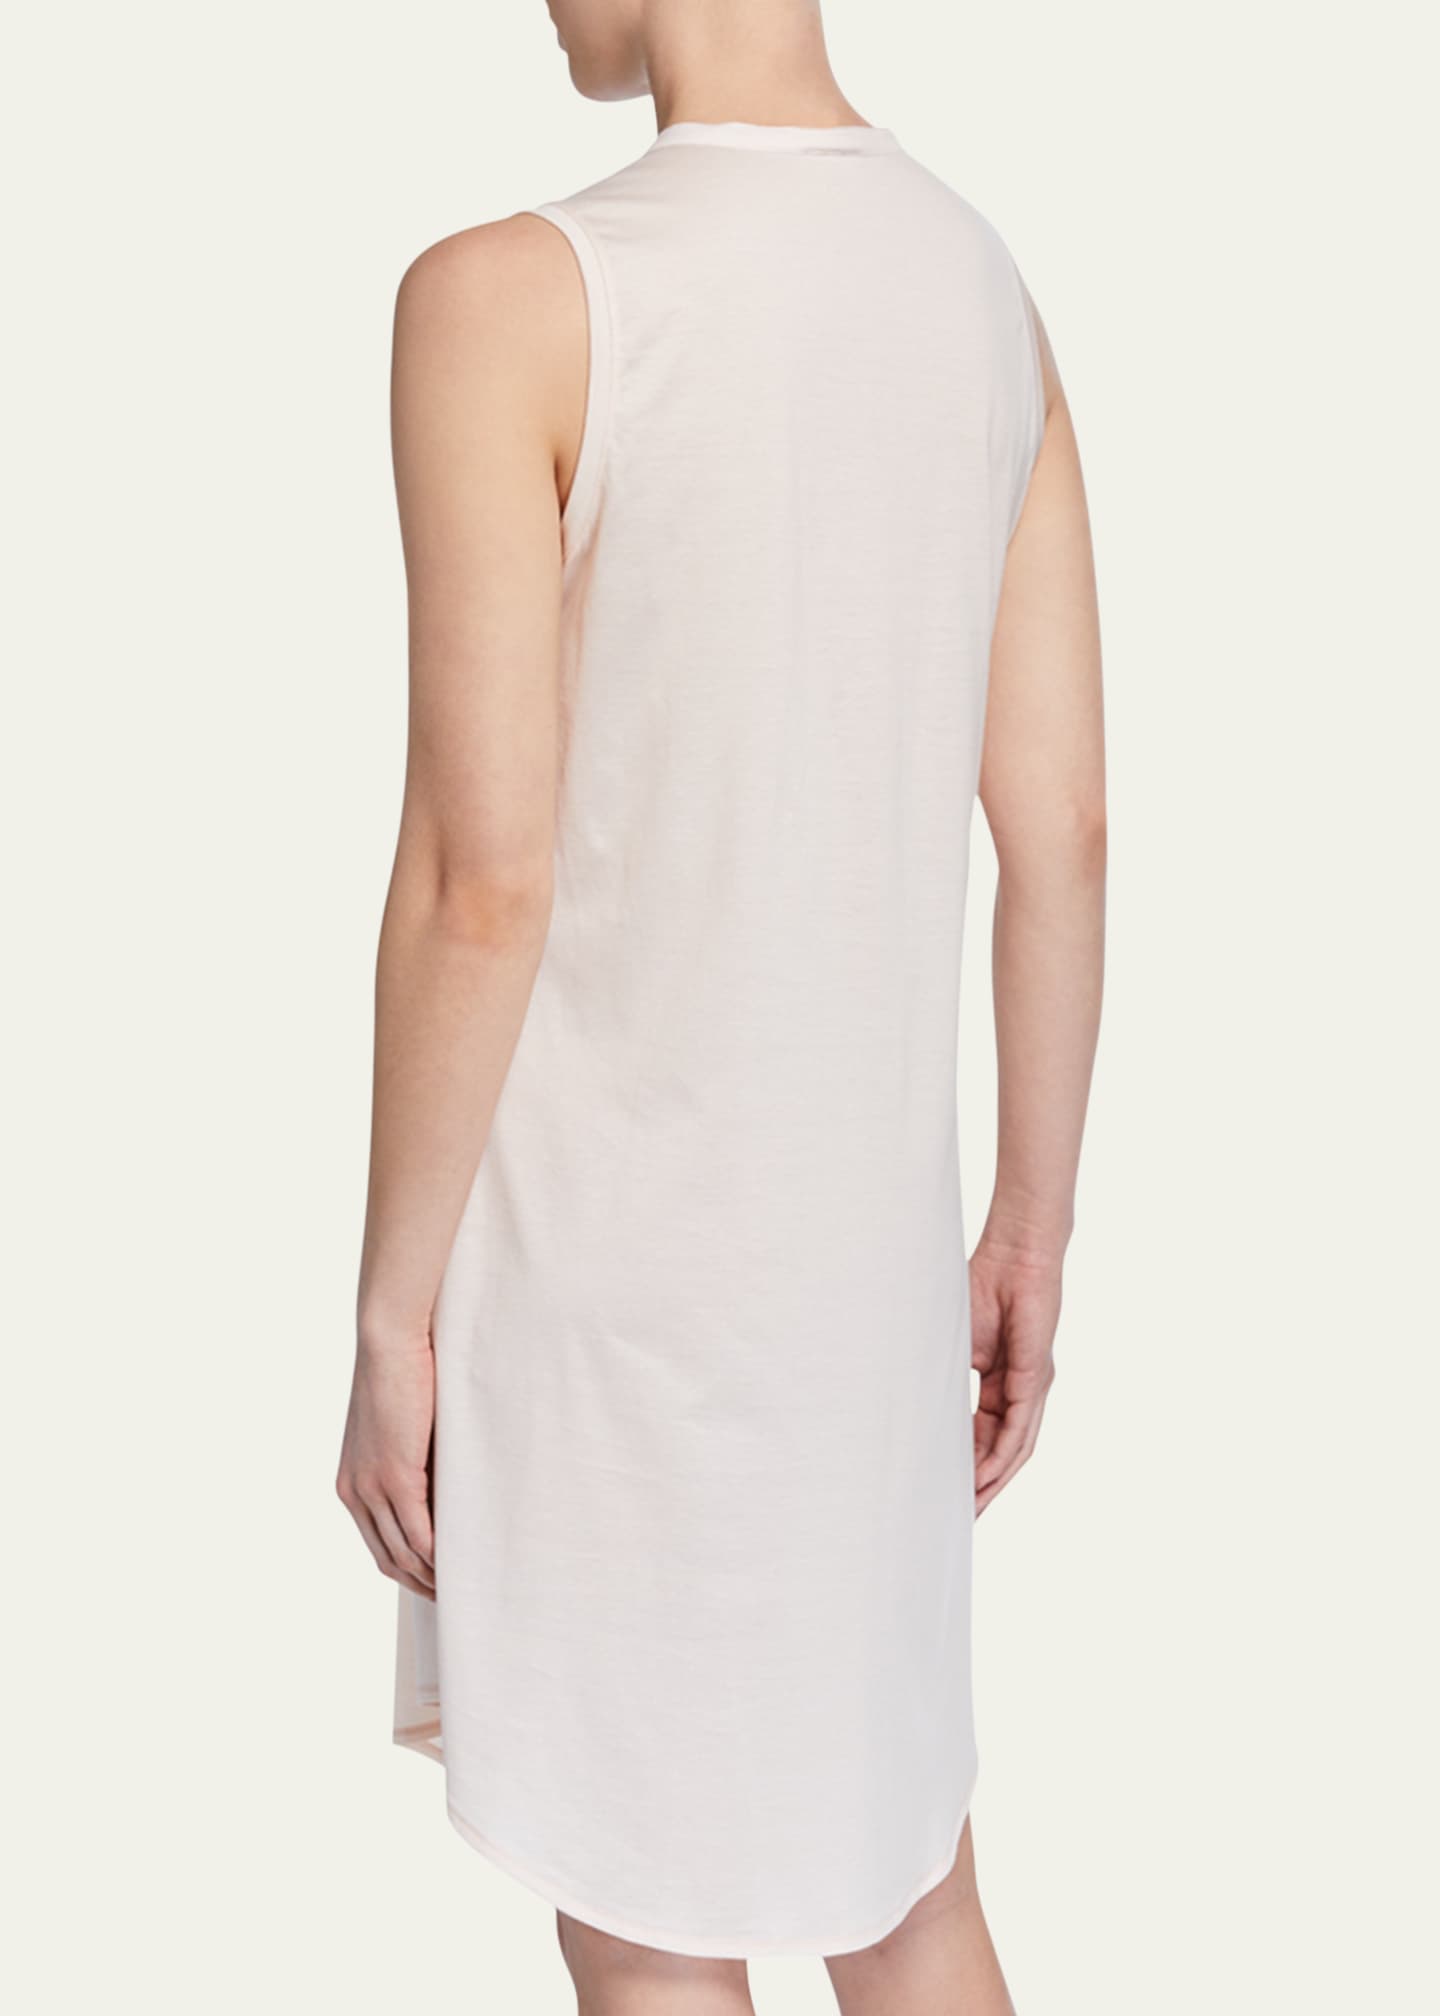 Hanro Cotton Deluxe Sleeveless Shirtwaist Nightgown Image 3 of 3